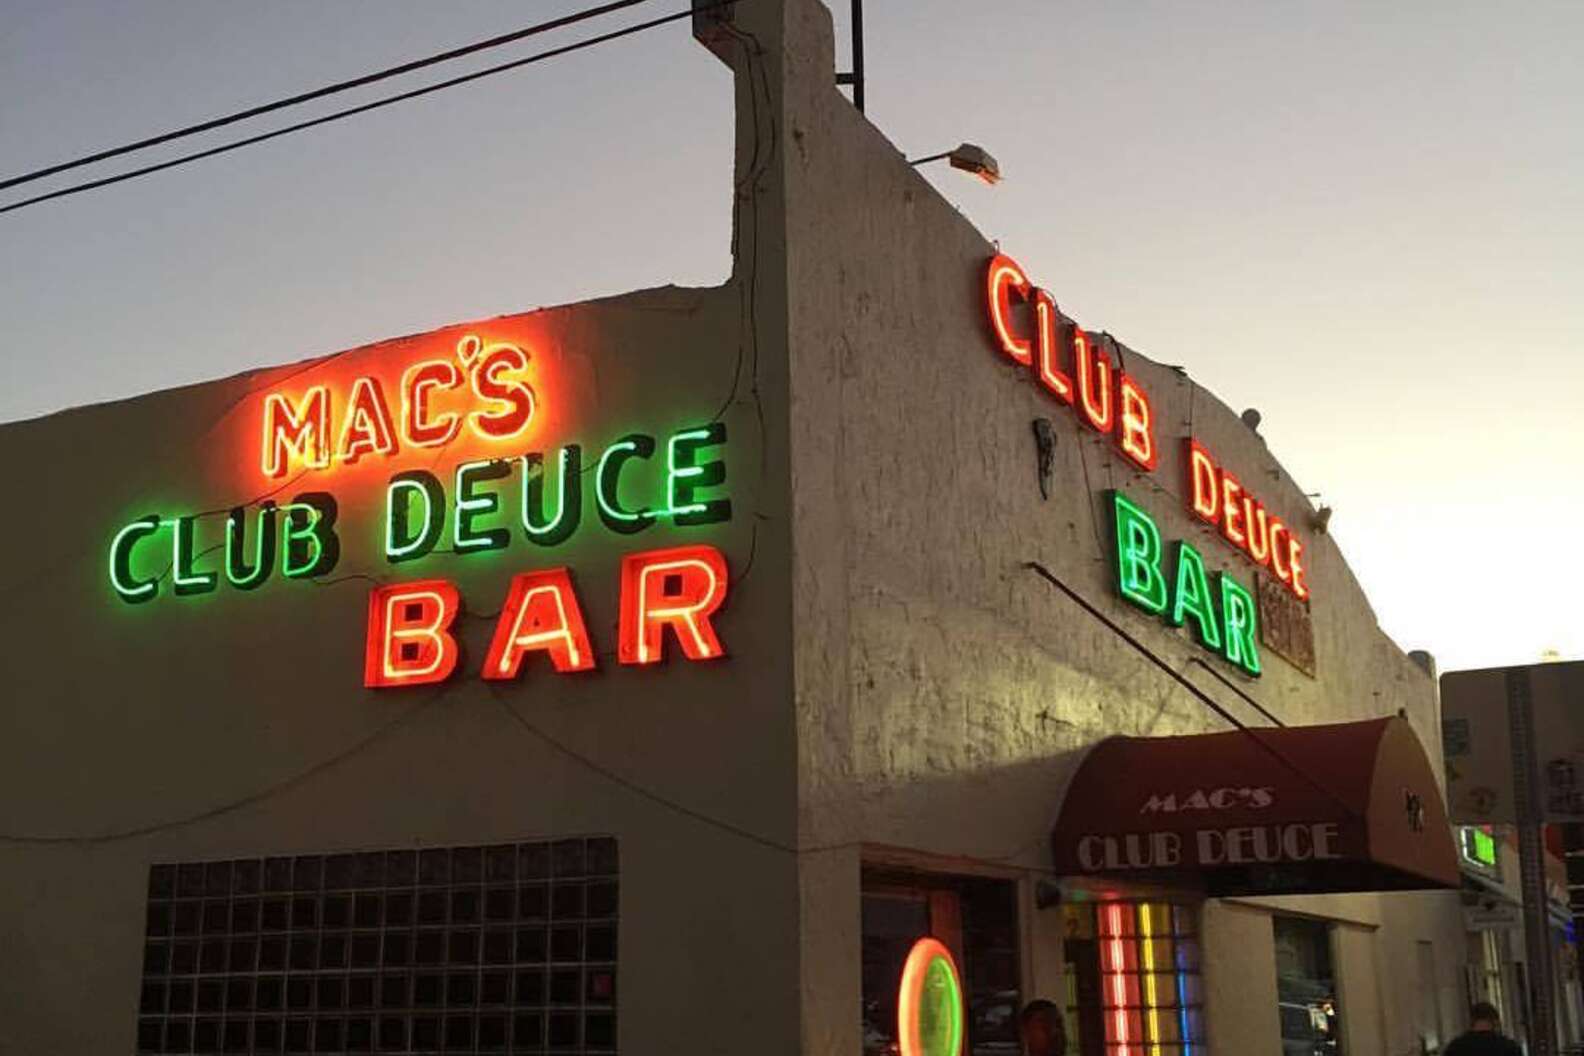 Mac's Club Deuce